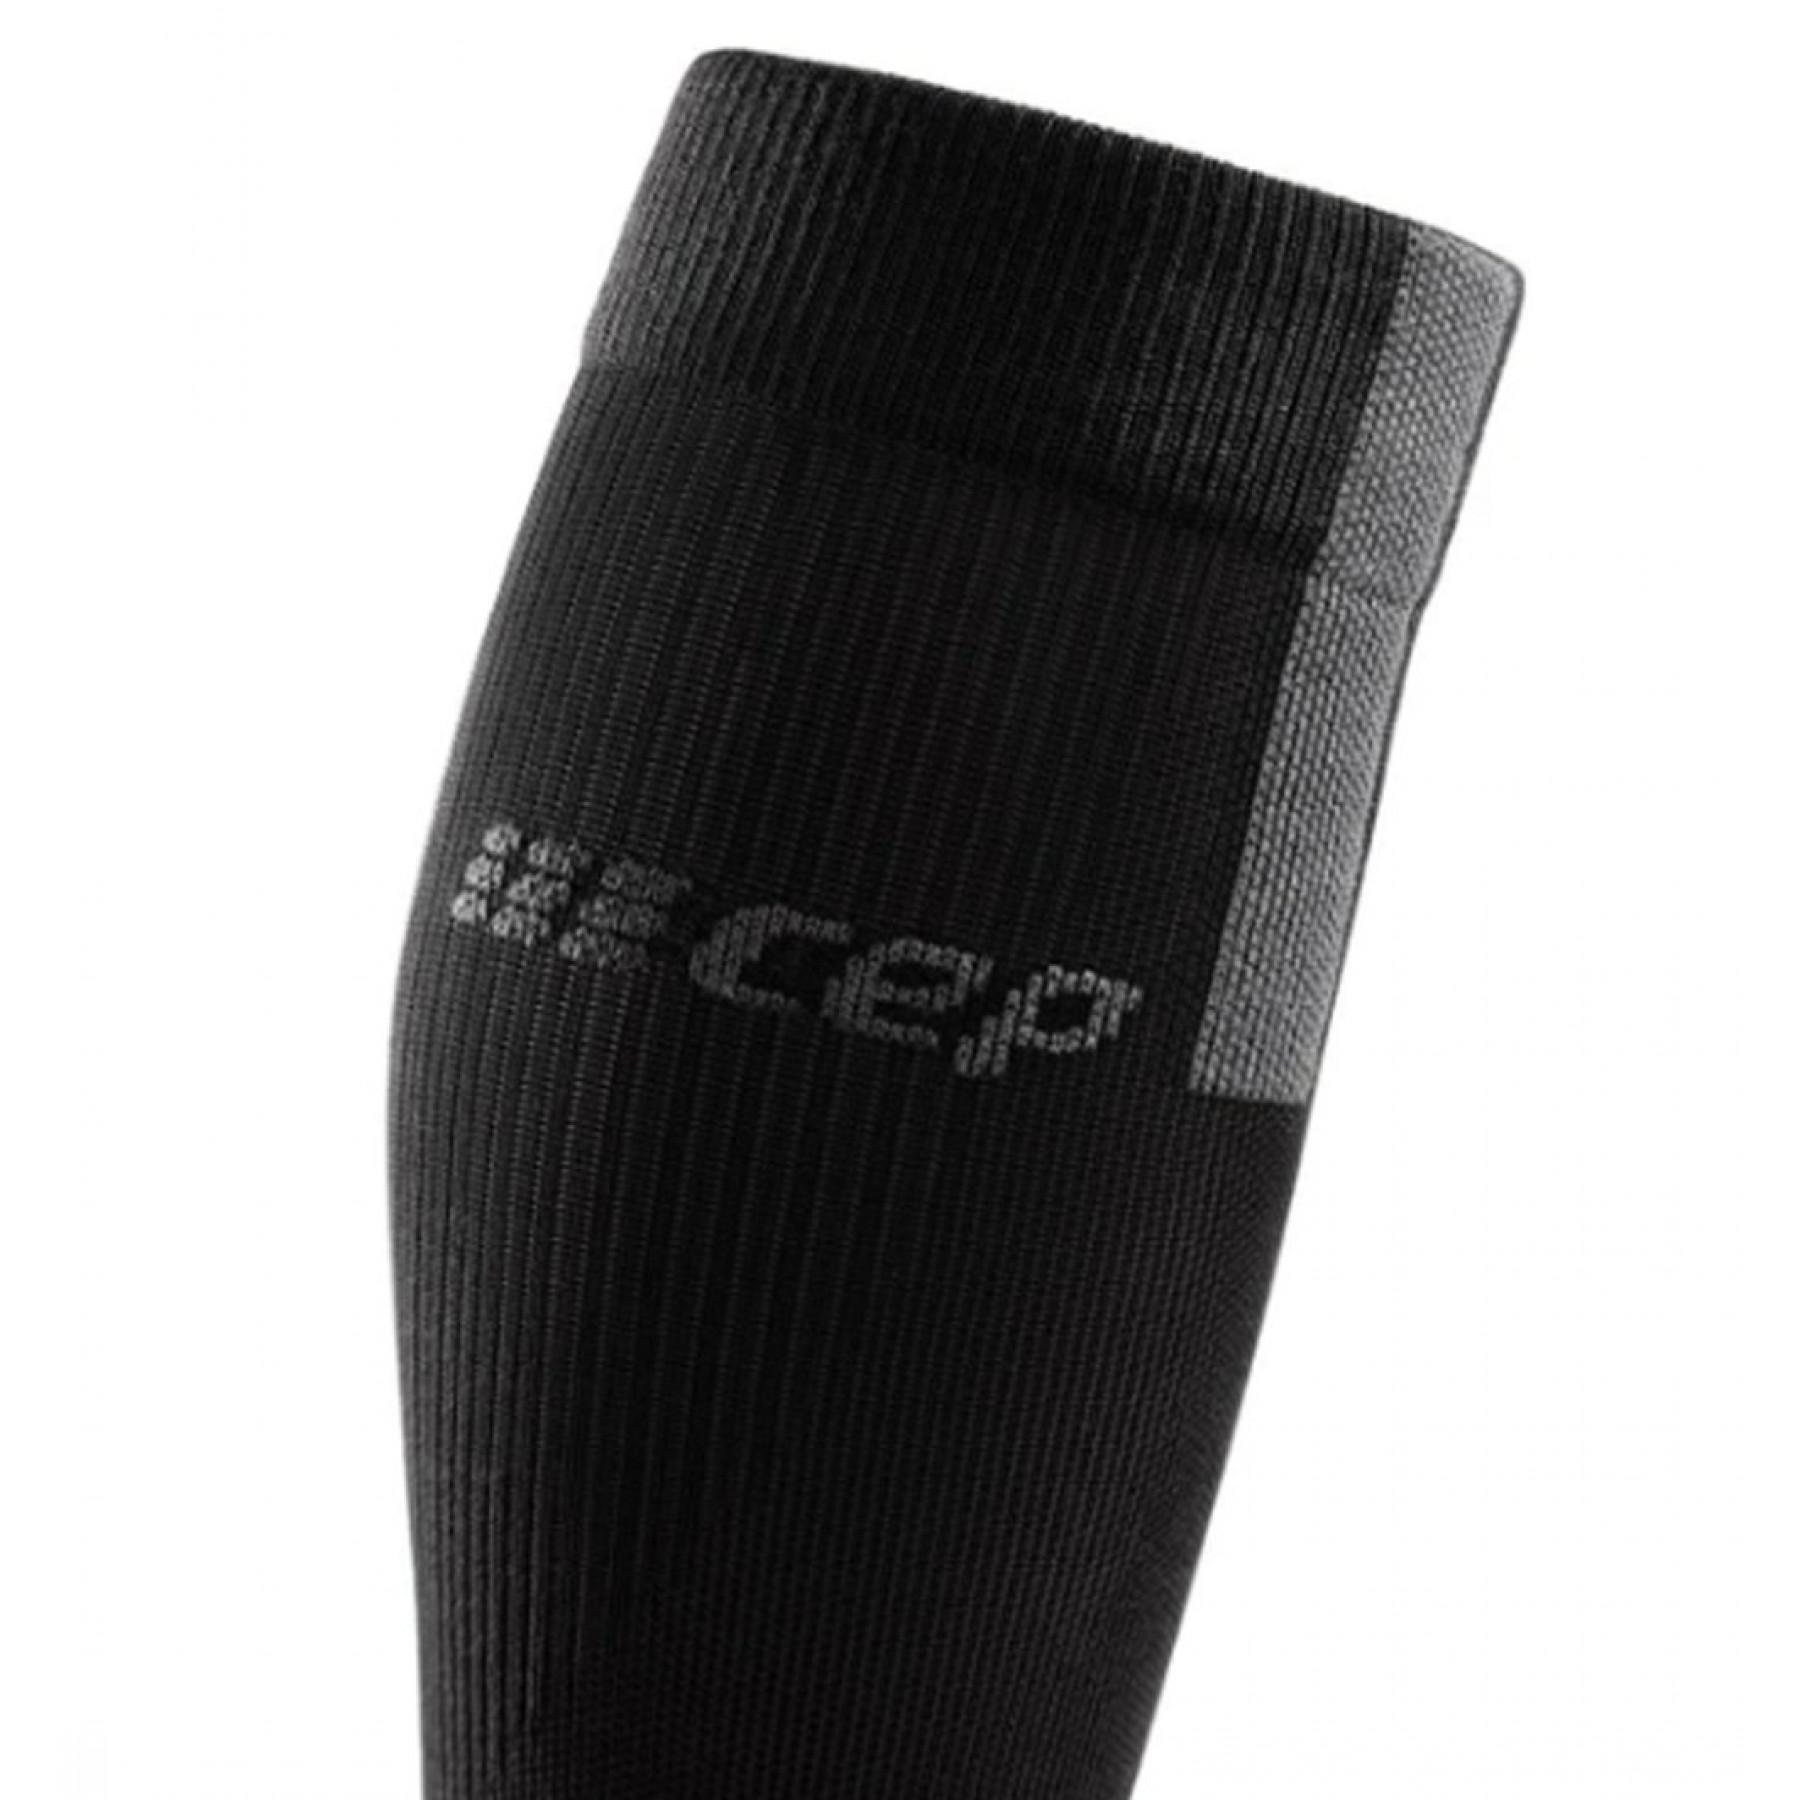 Cep High Compression Socks 3.0 Black